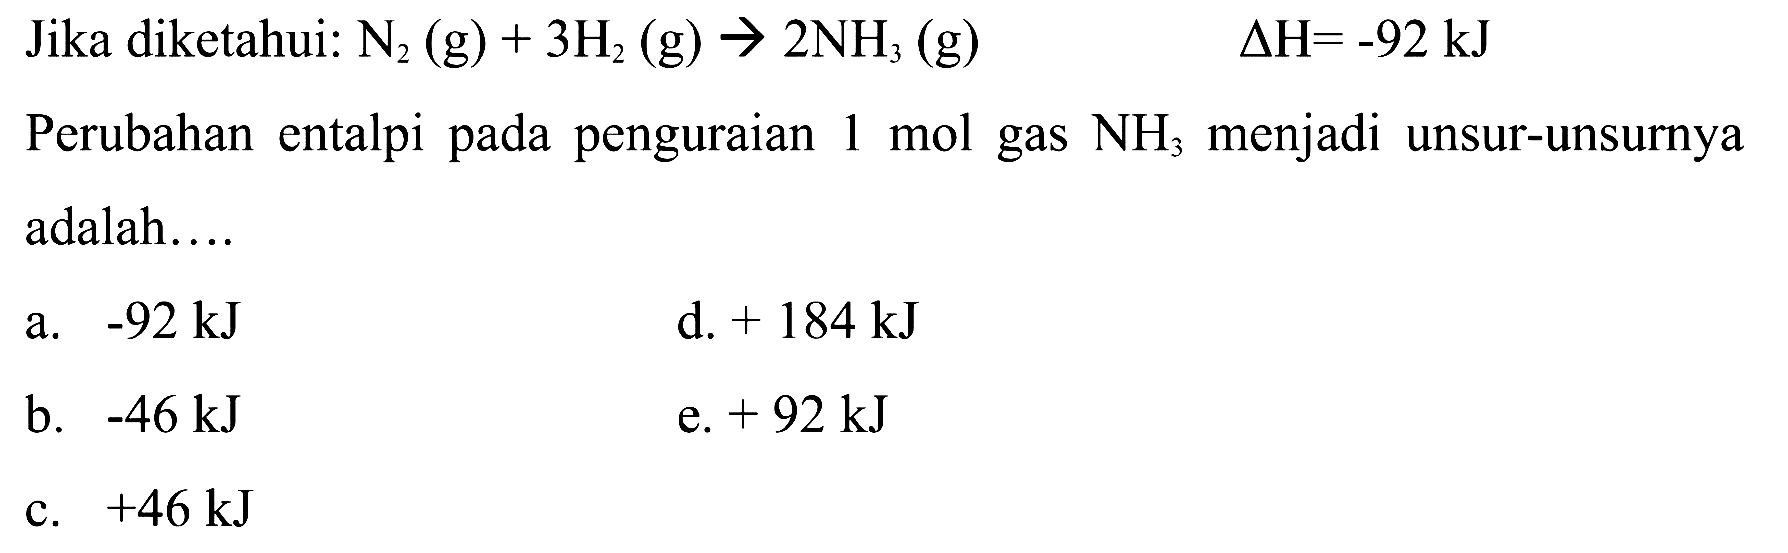 Jika diketahui: N2(g)+3H2(g)->2NH3(g) delta H=-92 kJ Perubahan entalpi pada penguraian 1 mol gas NH3 menjadi unsur-unsurnya adalah.... 